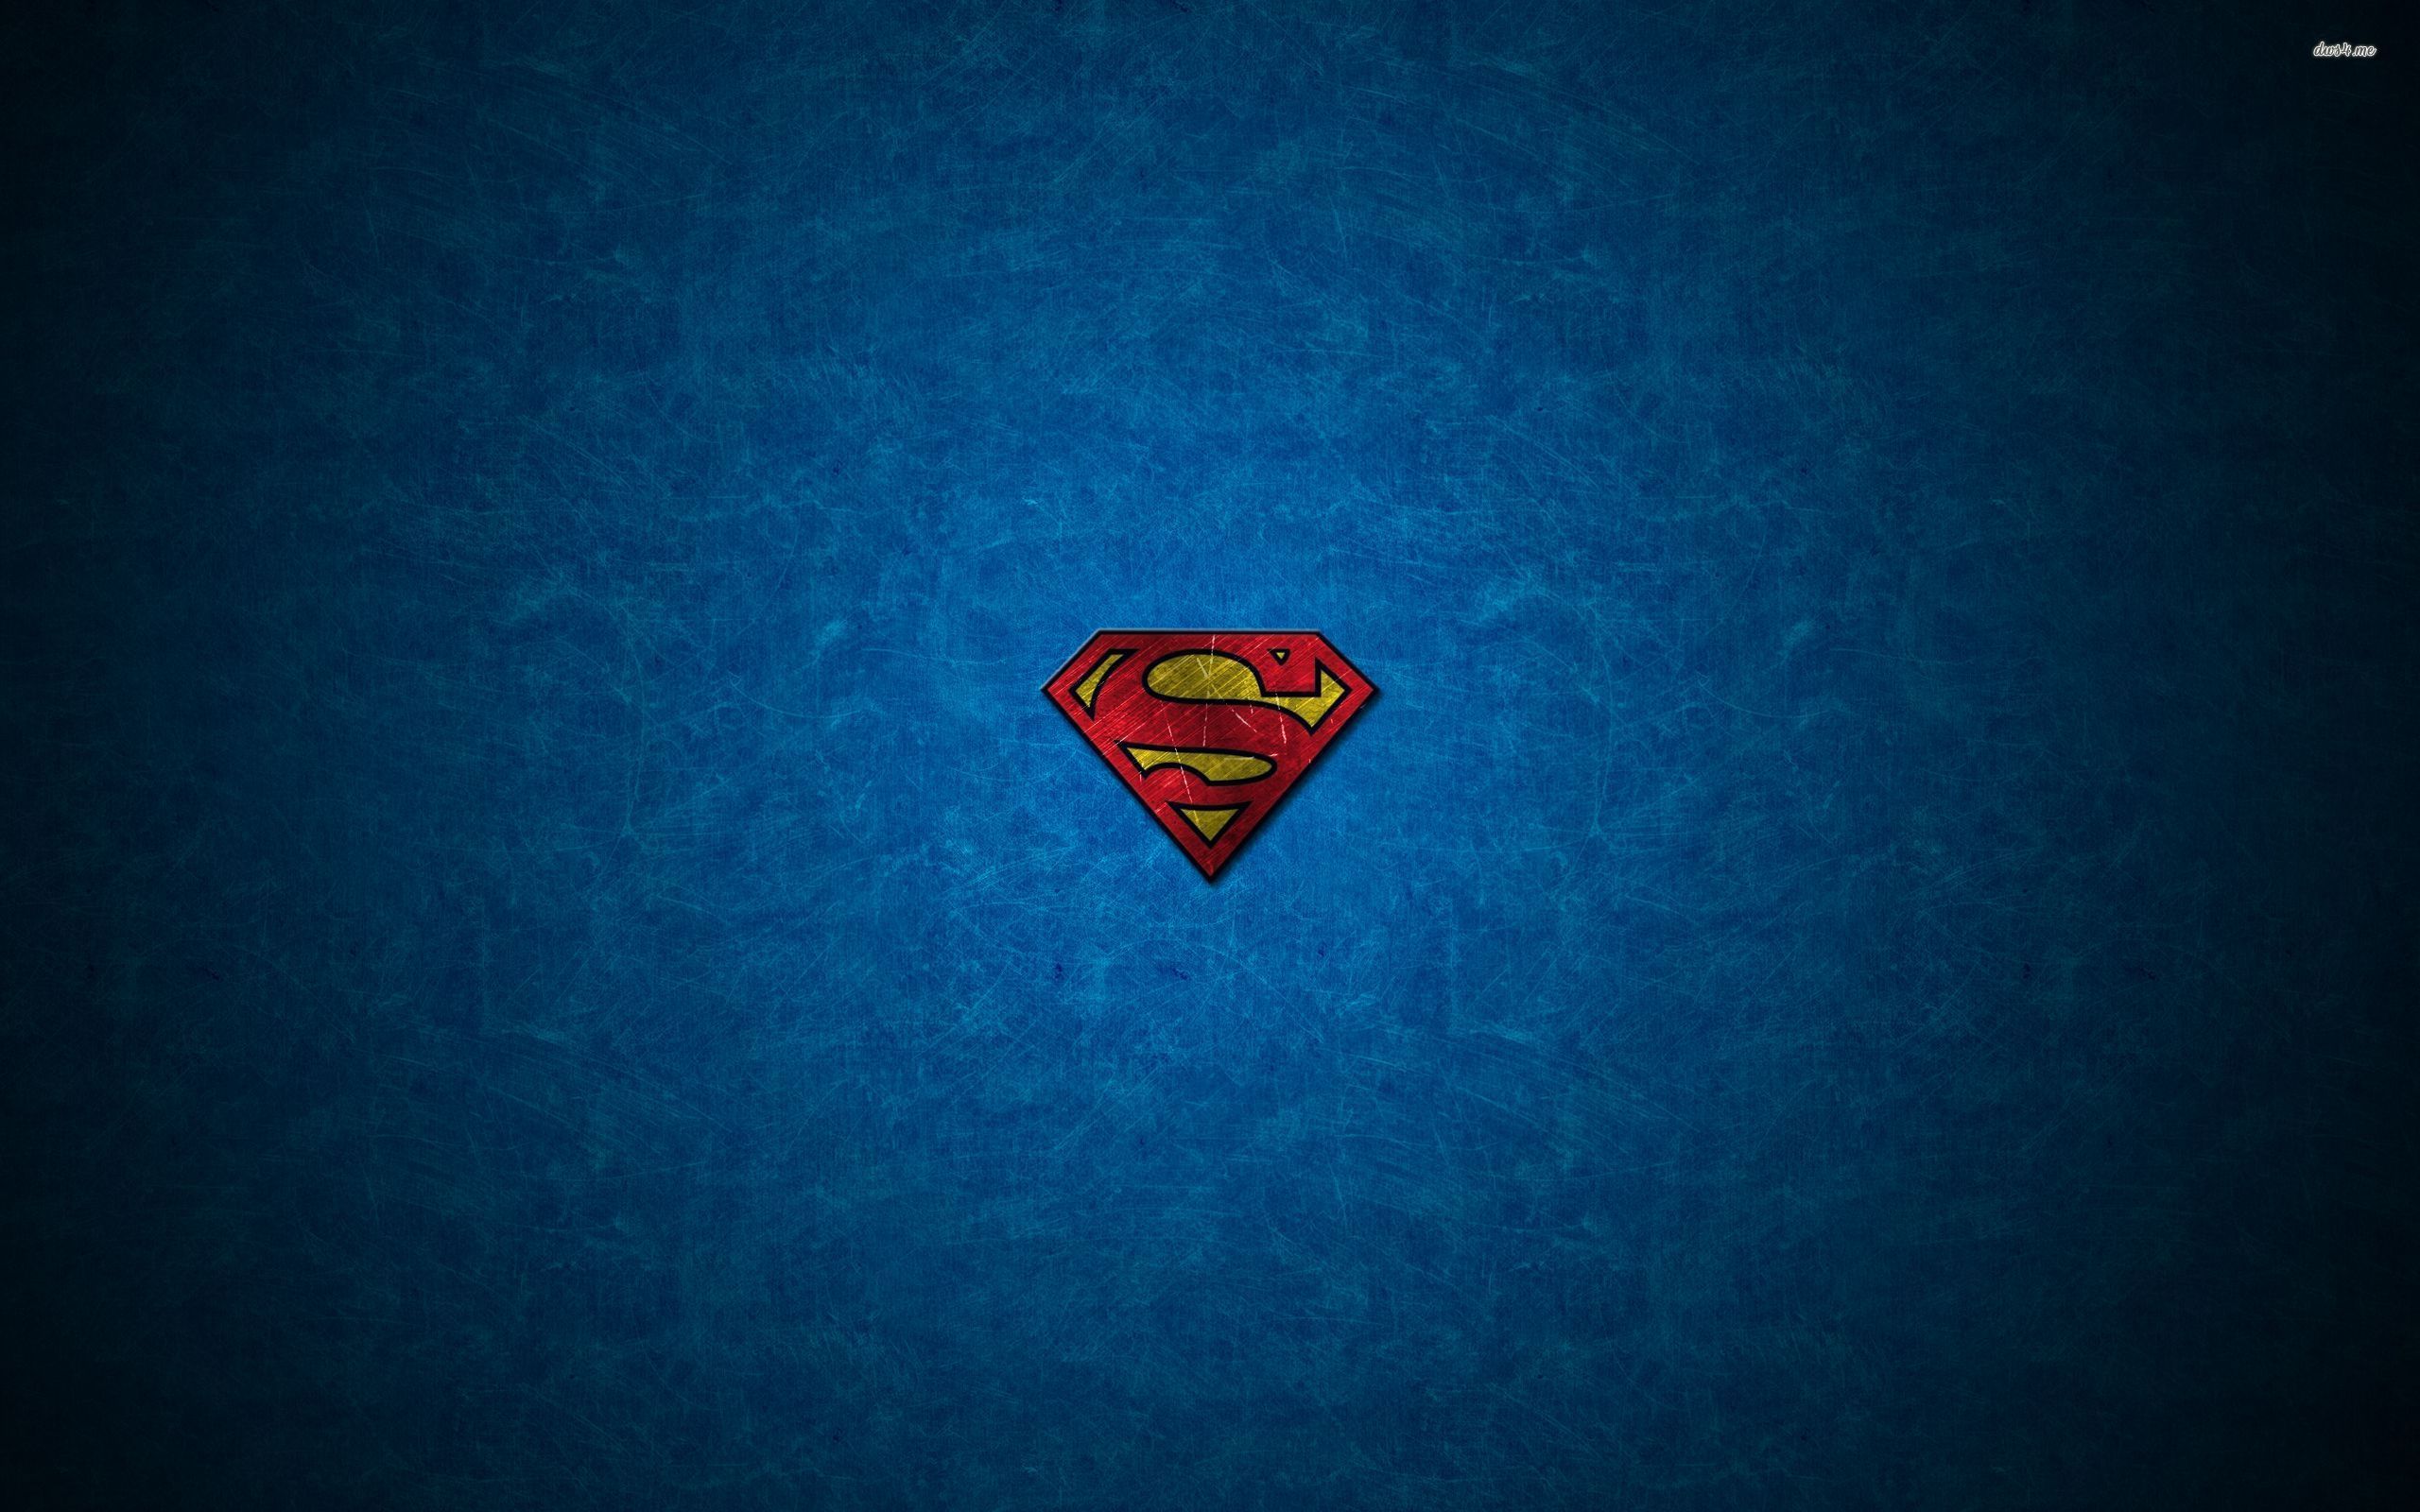 Superman logo wallpaper - Digital Art wallpapers - #22934